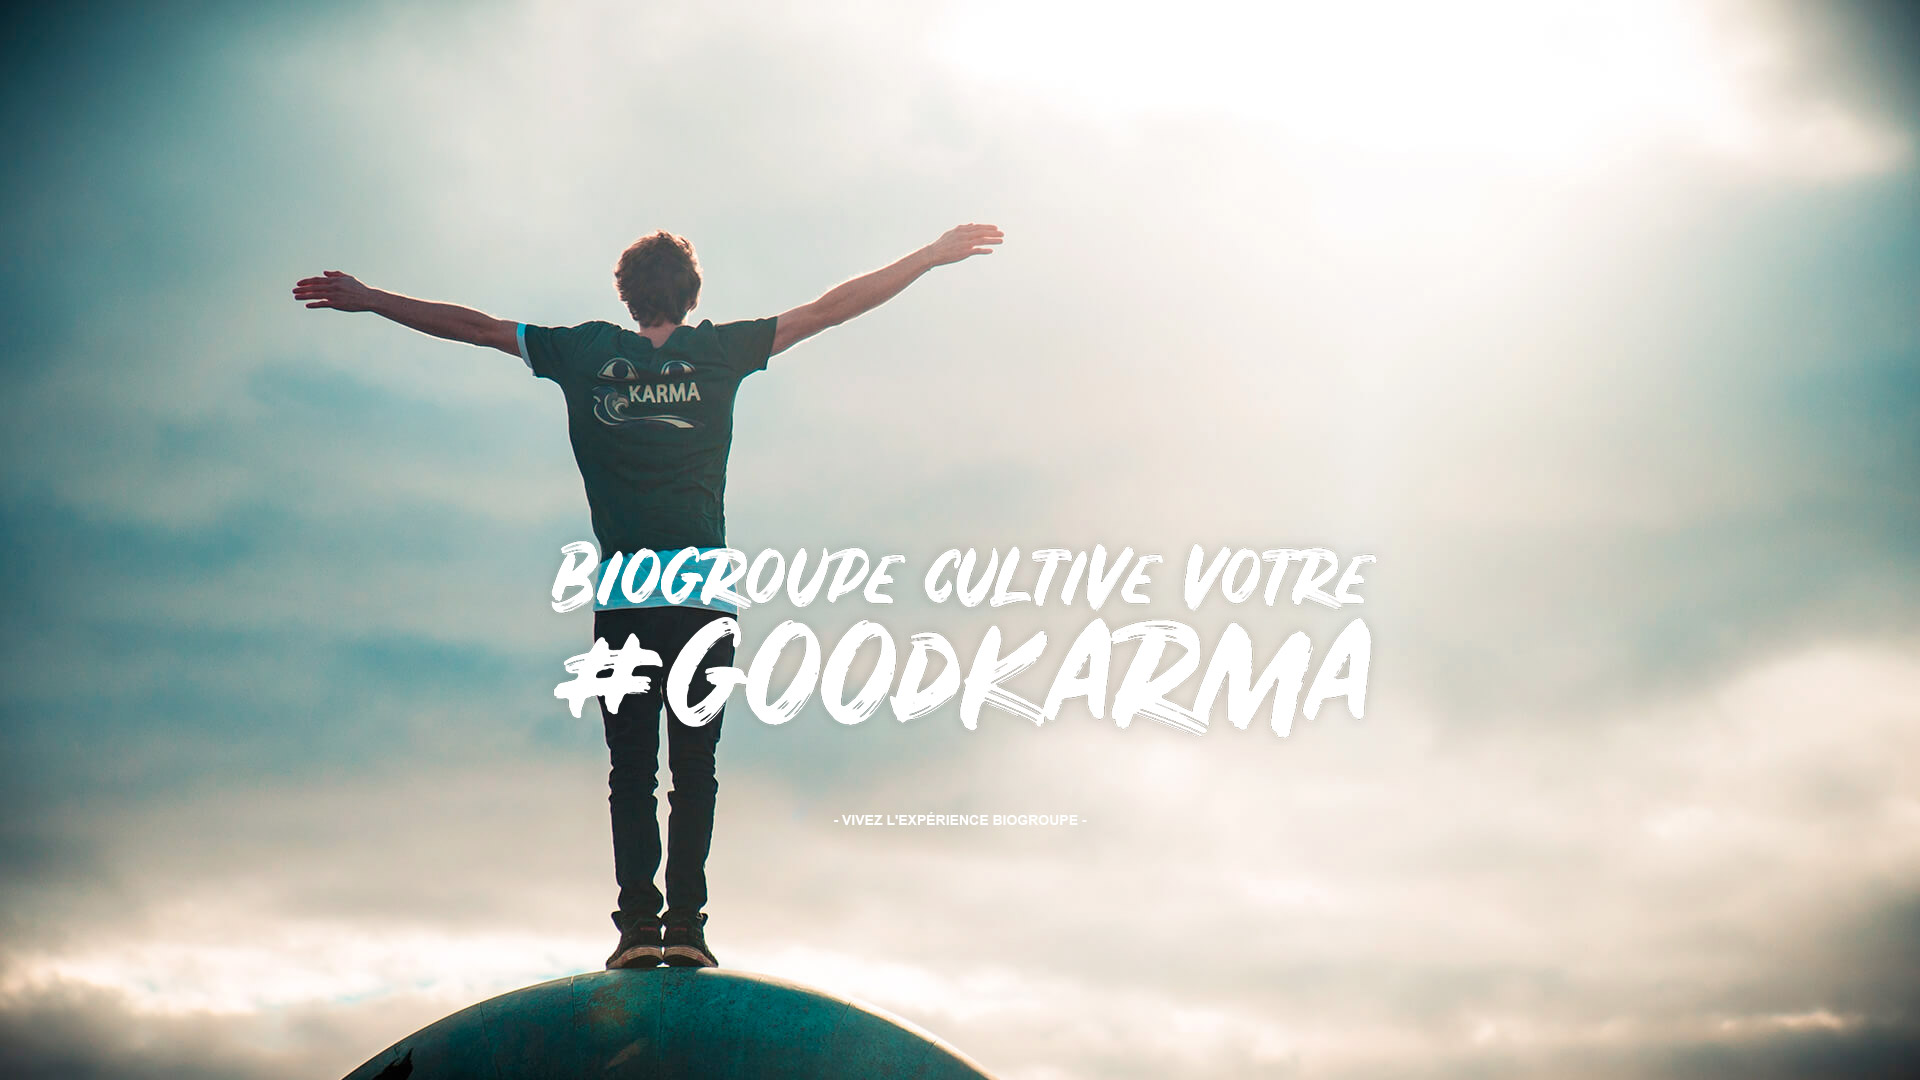 Biogroupe cultive votre #goodkarma